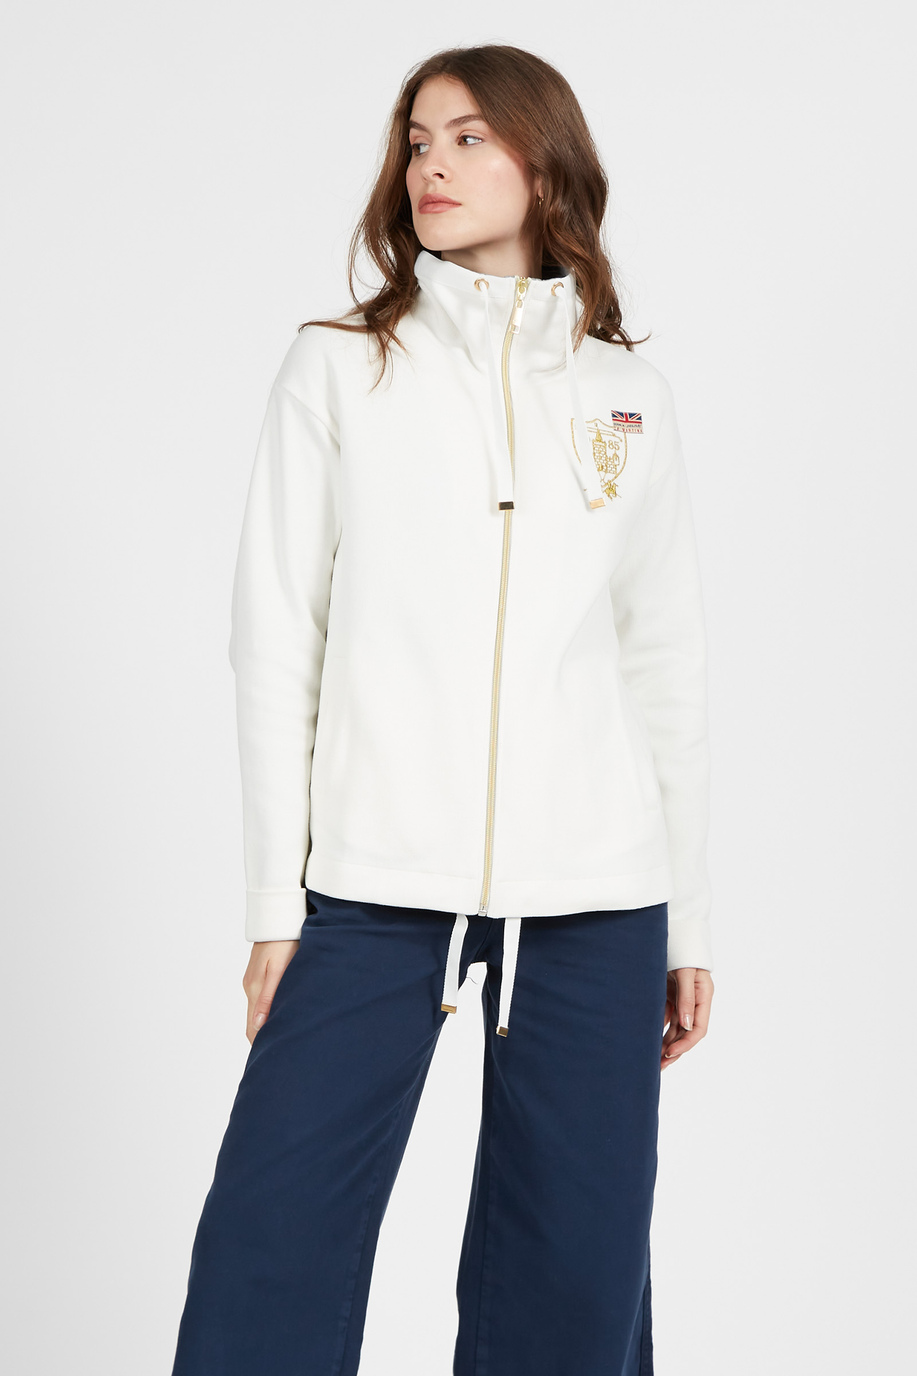 Women’s cotton high neck sweatshirt with regular fit zip front closure - Sporty chic wear | La Martina - Official Online Shop